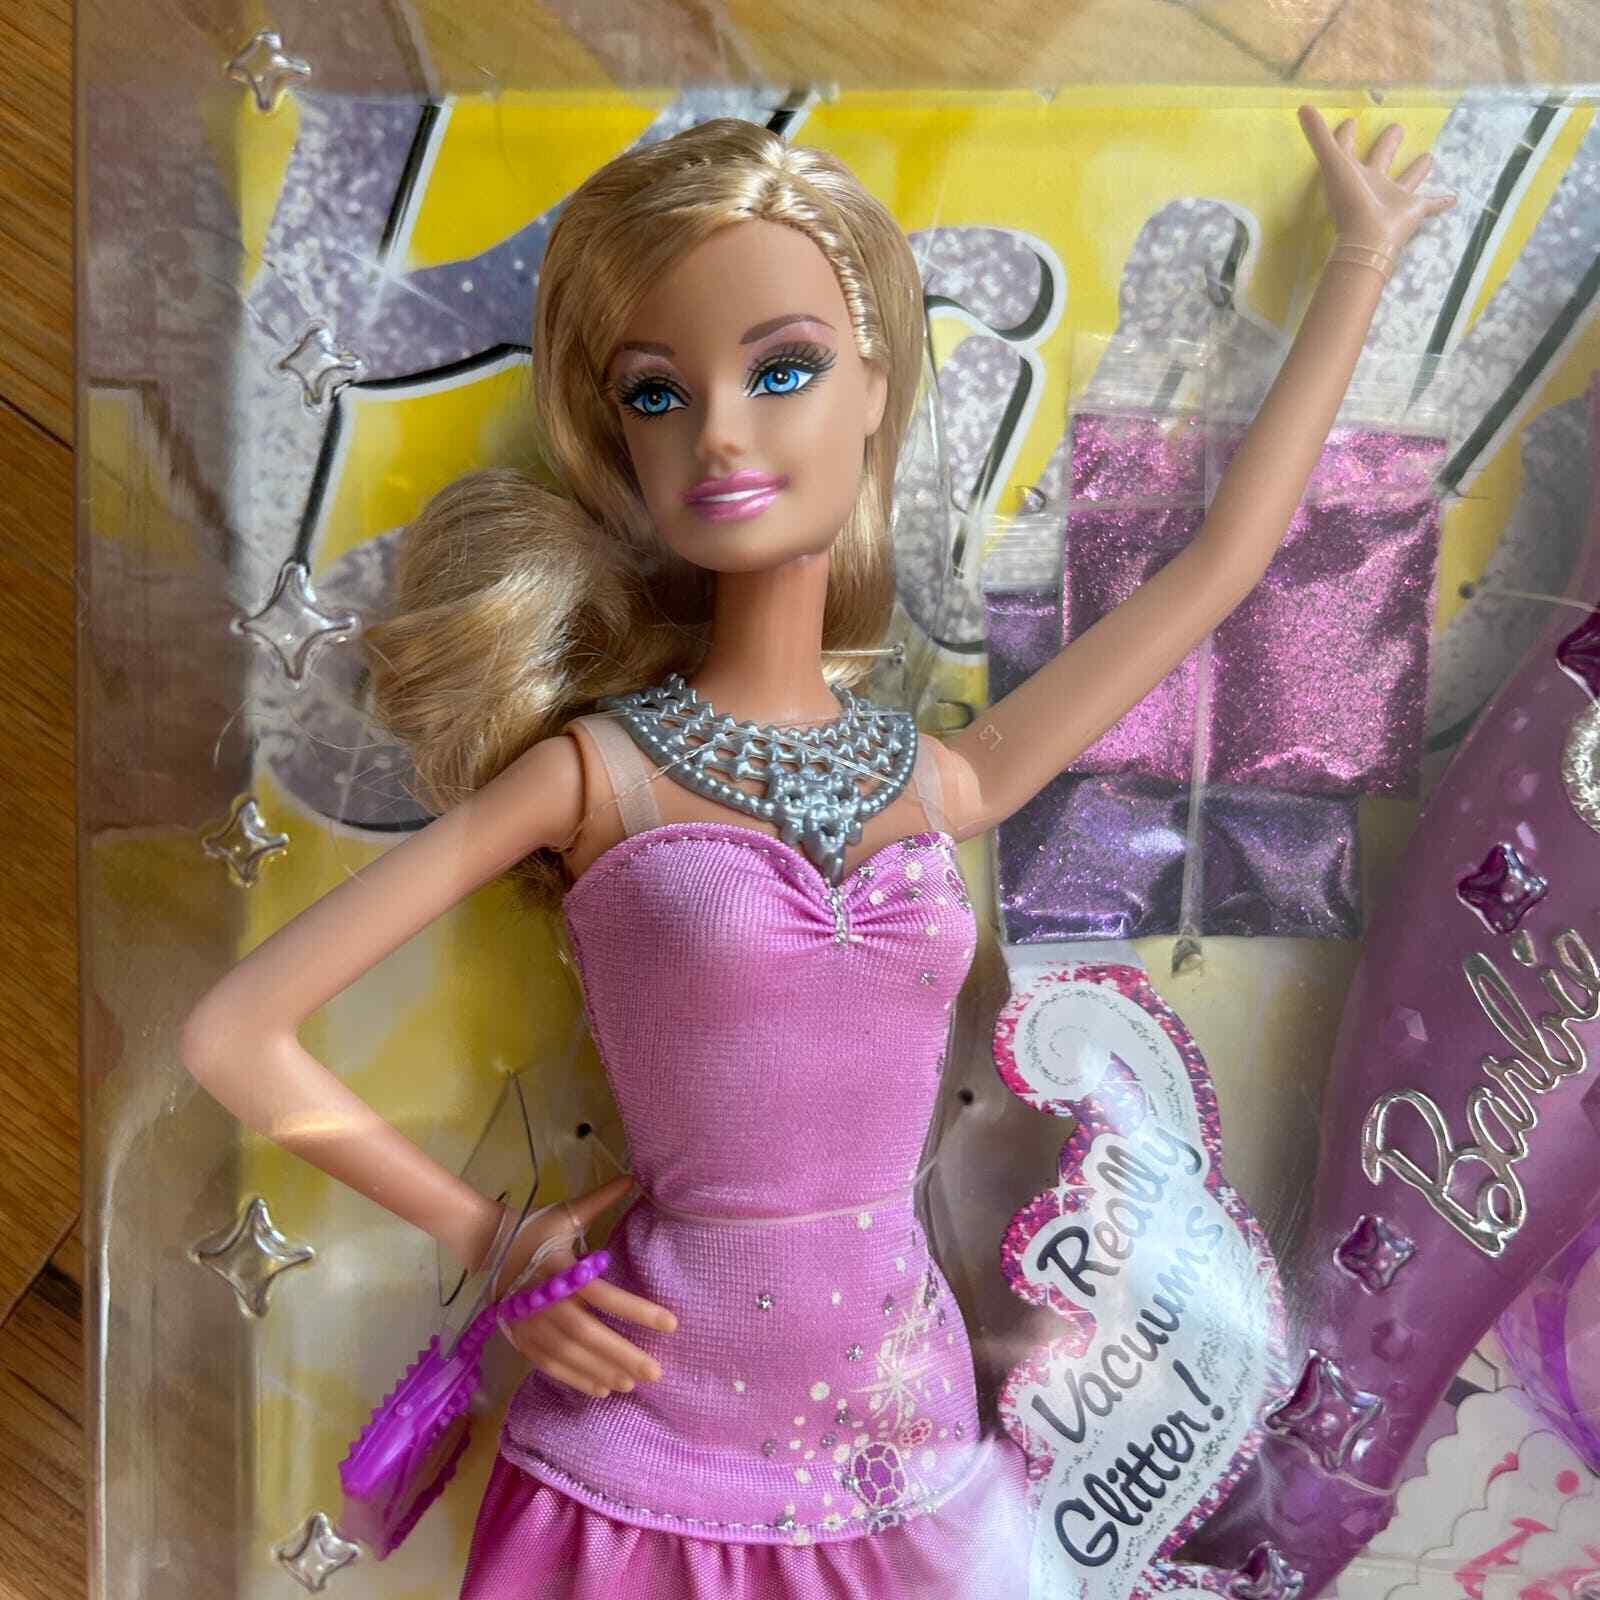 Barbie Glitter Glam Vac 2010 Barbie Doll Mattel #T7436 NEW IN BOX